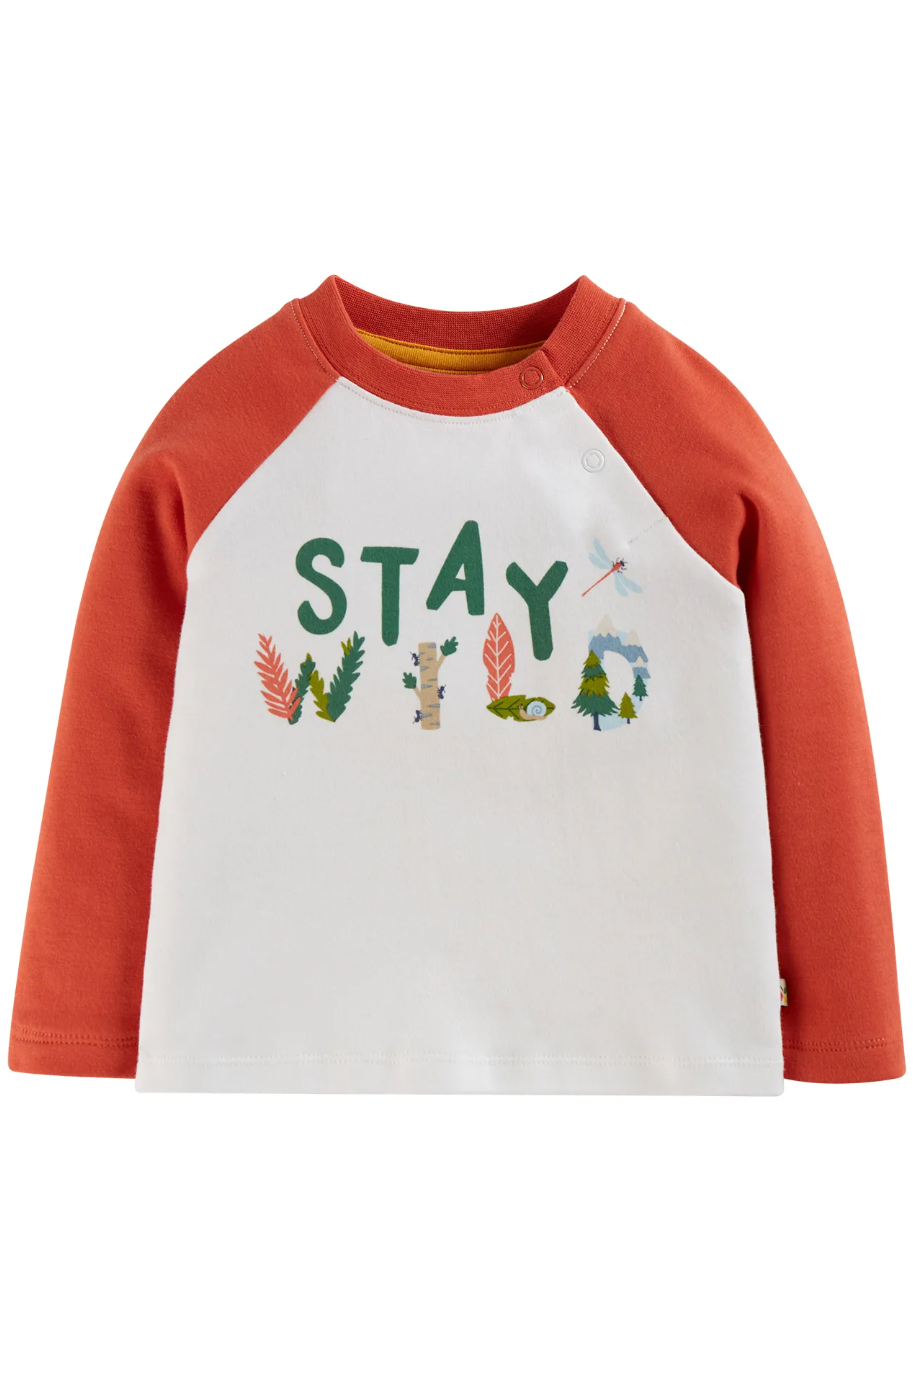 Frugi Luke Raglan Top in Stay Wild/Paprika-Kids-Ohh! By Gum - Shop Sustainable